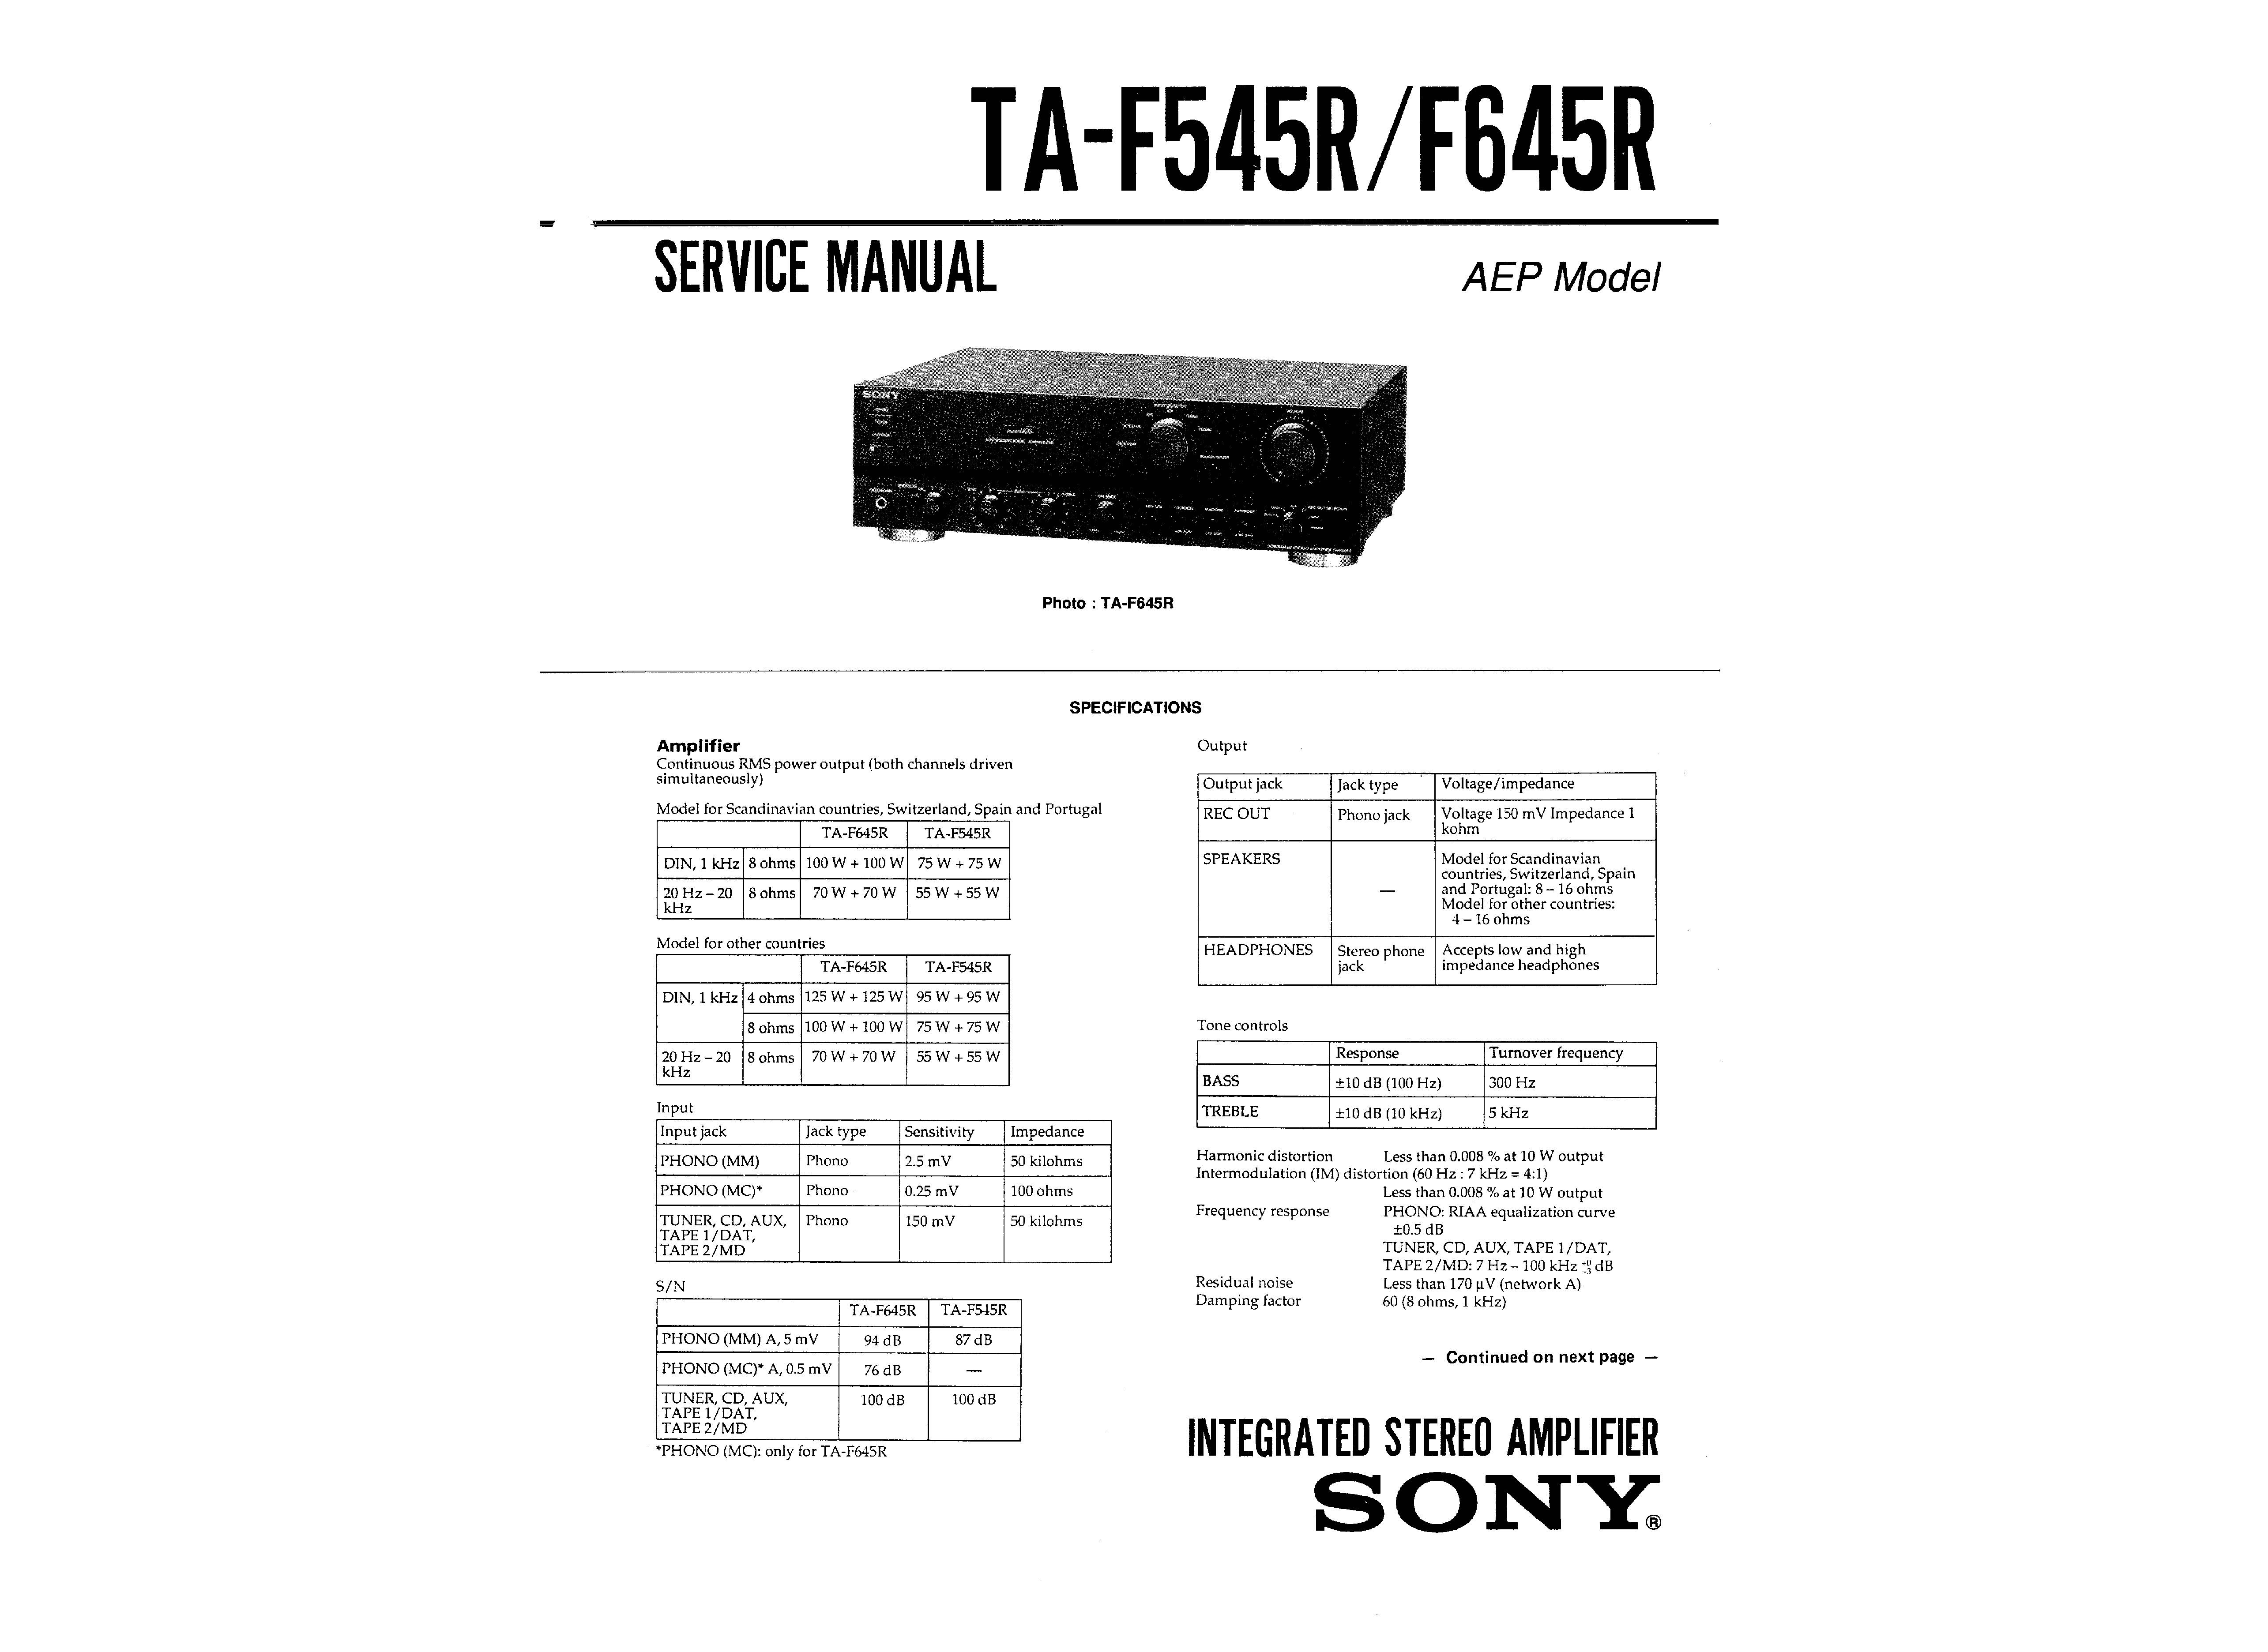 Sony TA-F645R